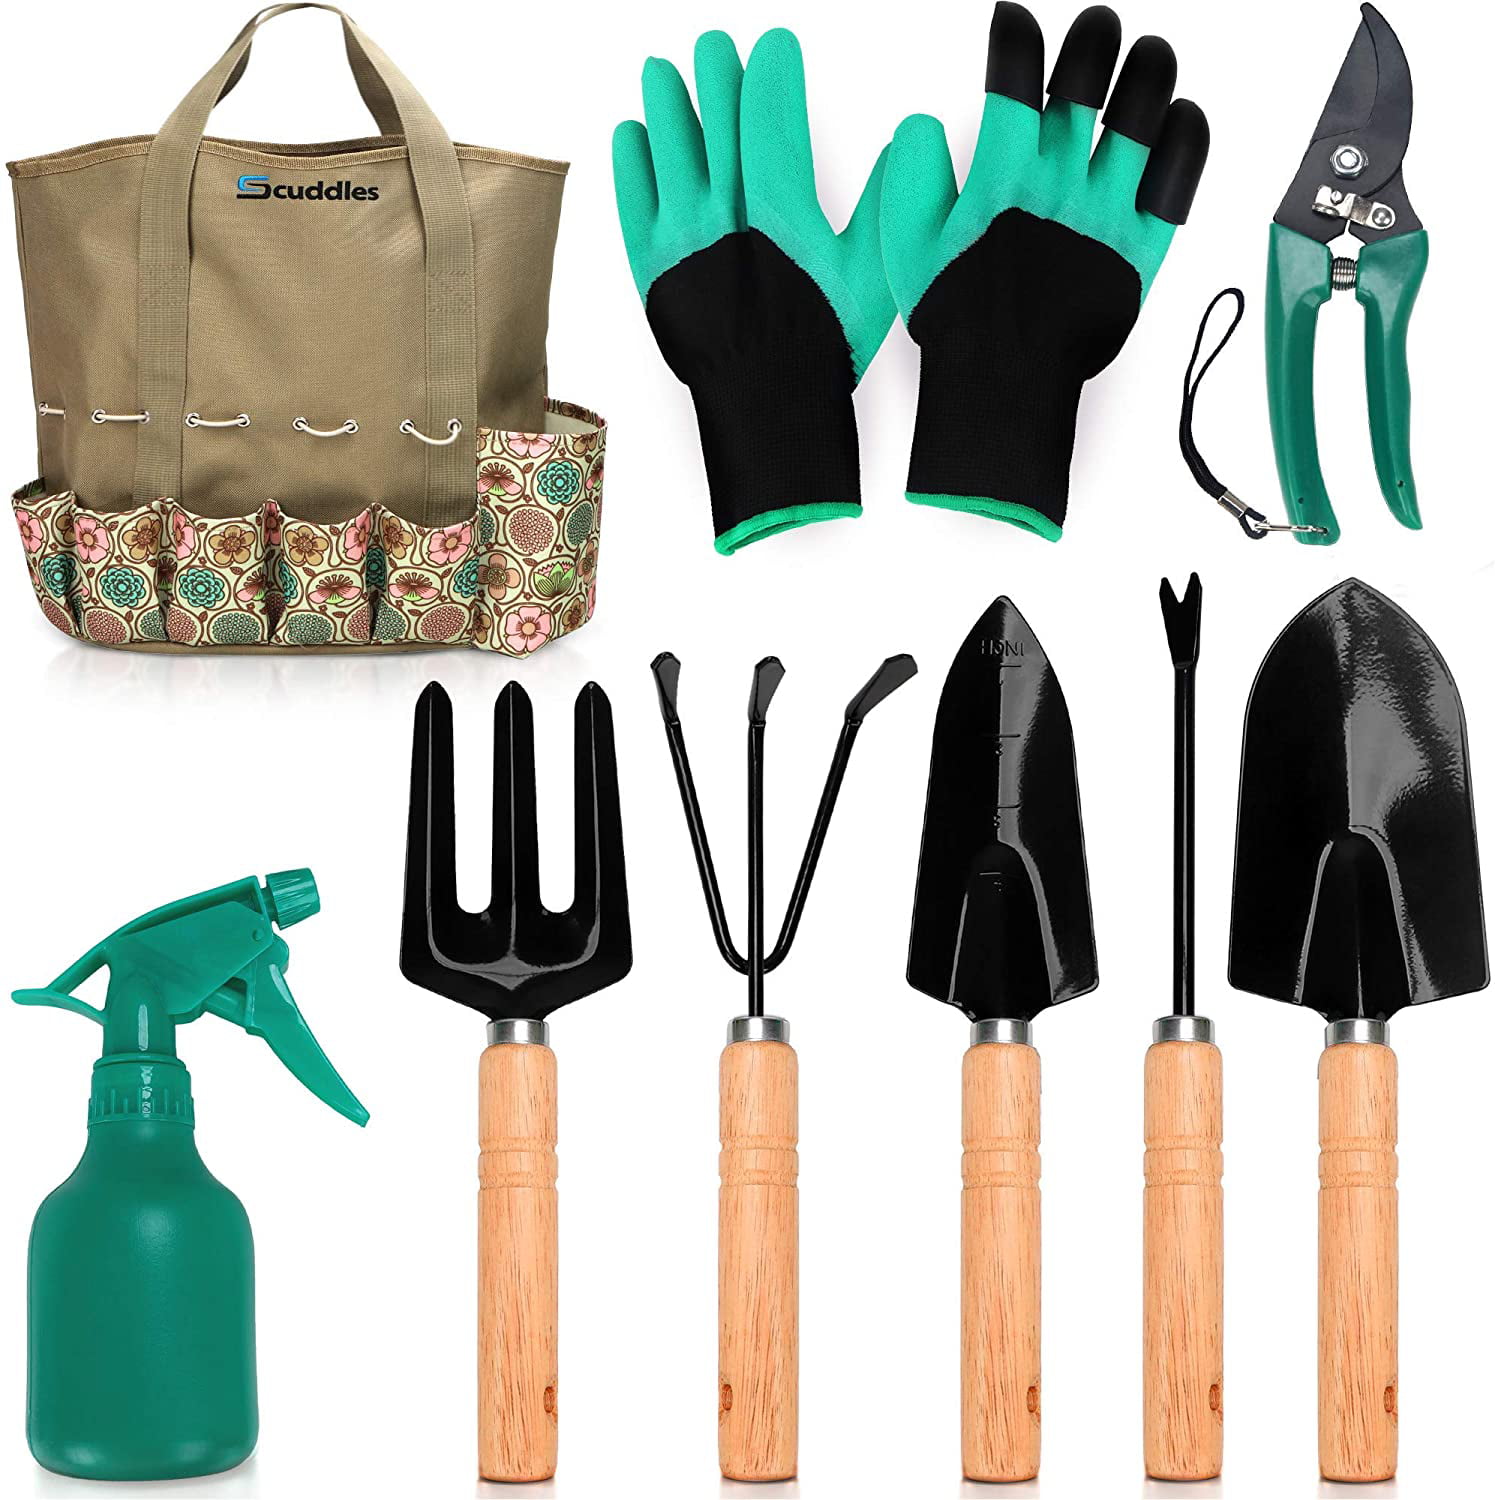 joyMerit 2-Packs Heavy Duty Plastic Scoop Handy Tools for Garden Works